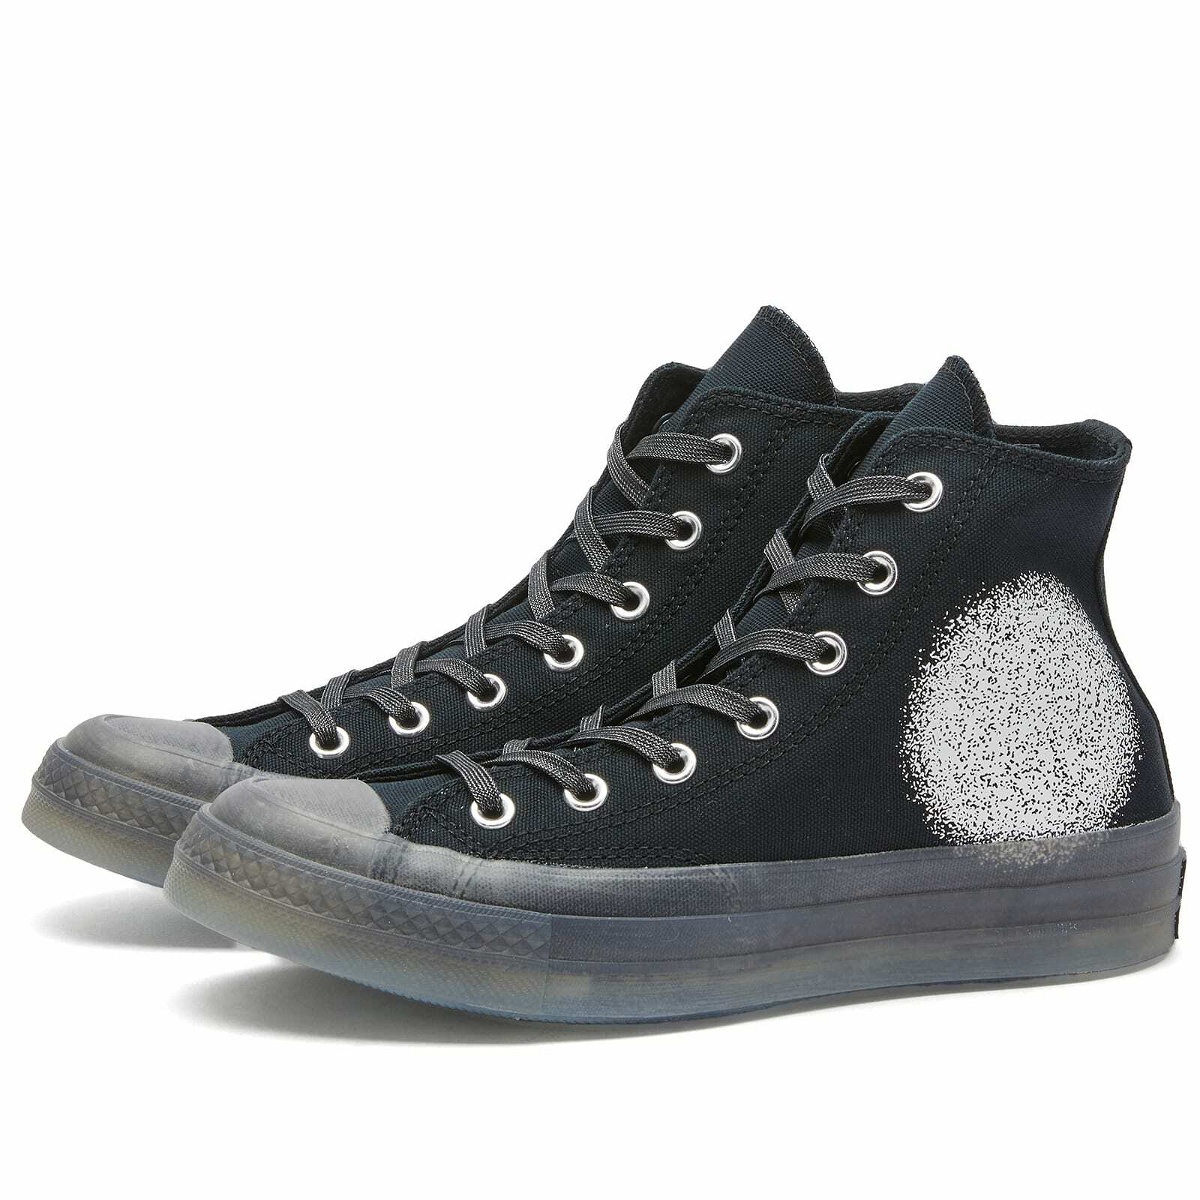 Converse x Turnstile CT70 Hi-Top Sneakers in Black/Grey/White Converse